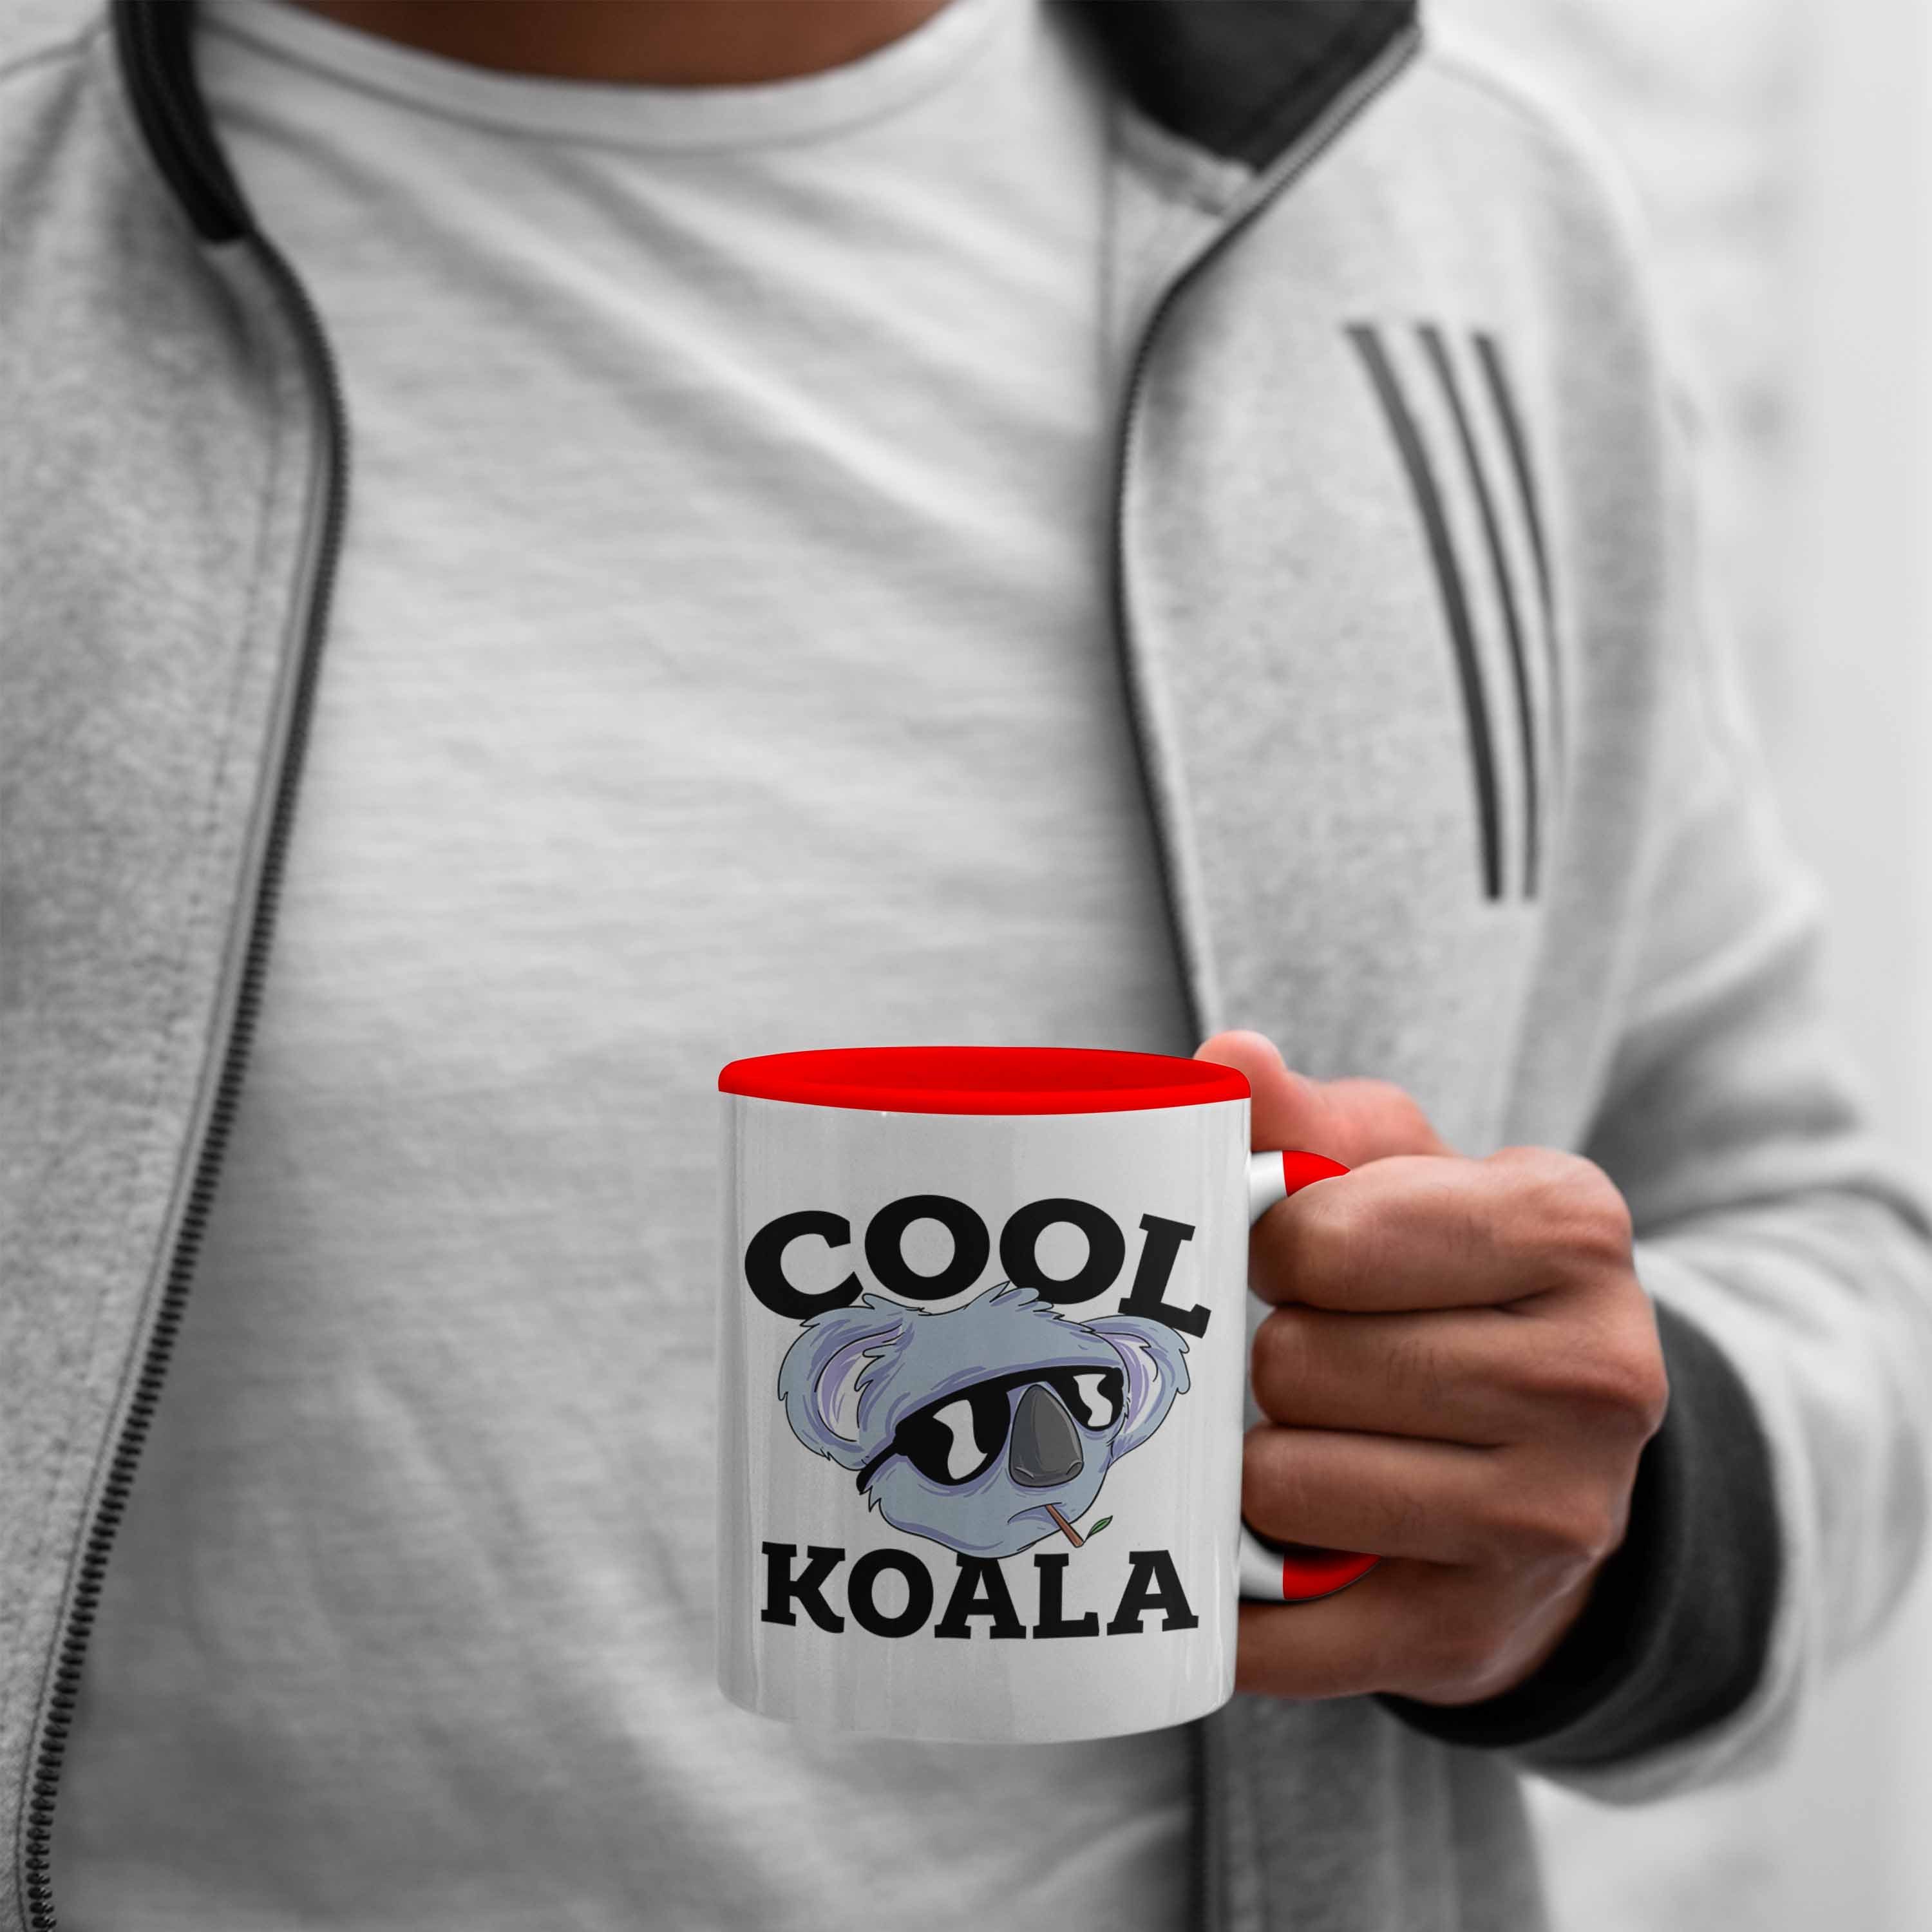 Koala Tasse für Koala-Liebhaber Rot Tasse Trendation Geschenkidee Tasse Koala-Aufdruck